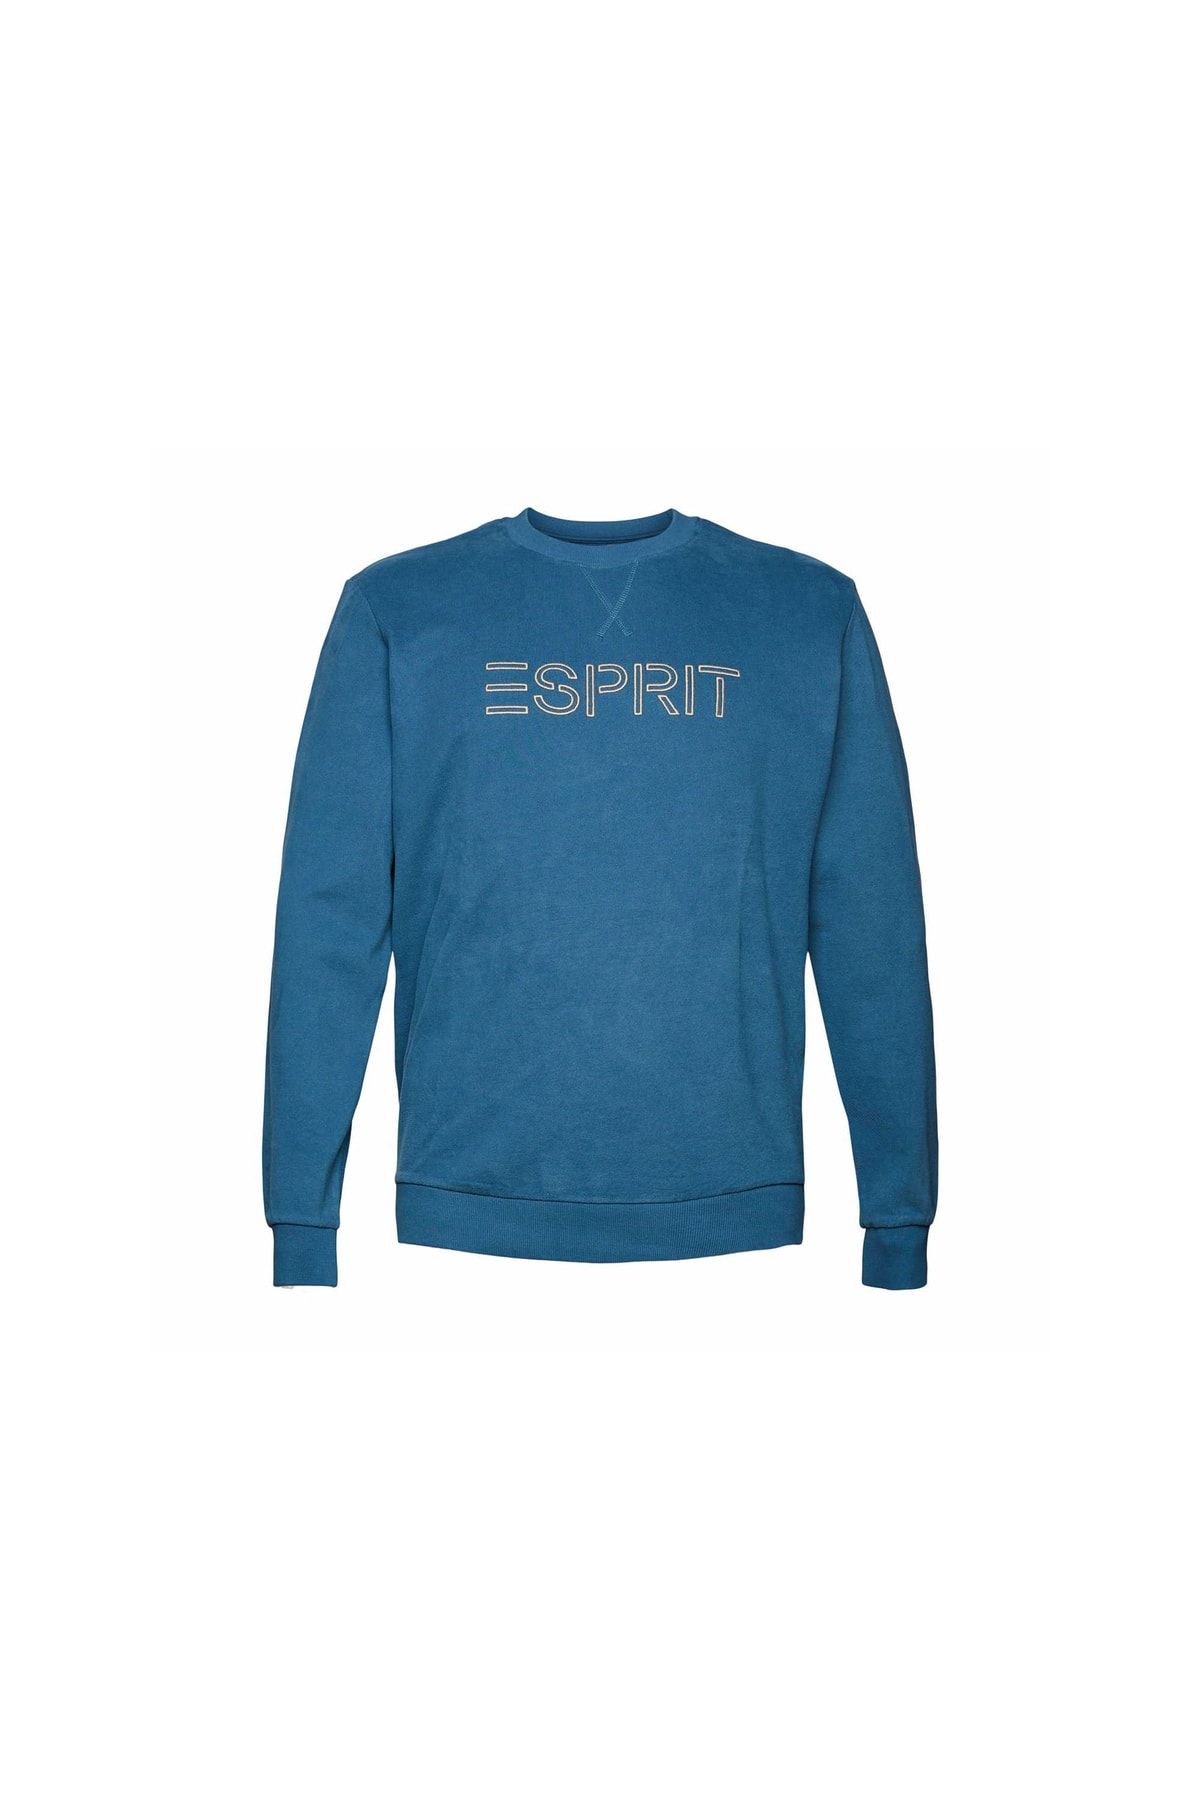 Esprit Pullover - - Regular Trendyol Fit Blau 